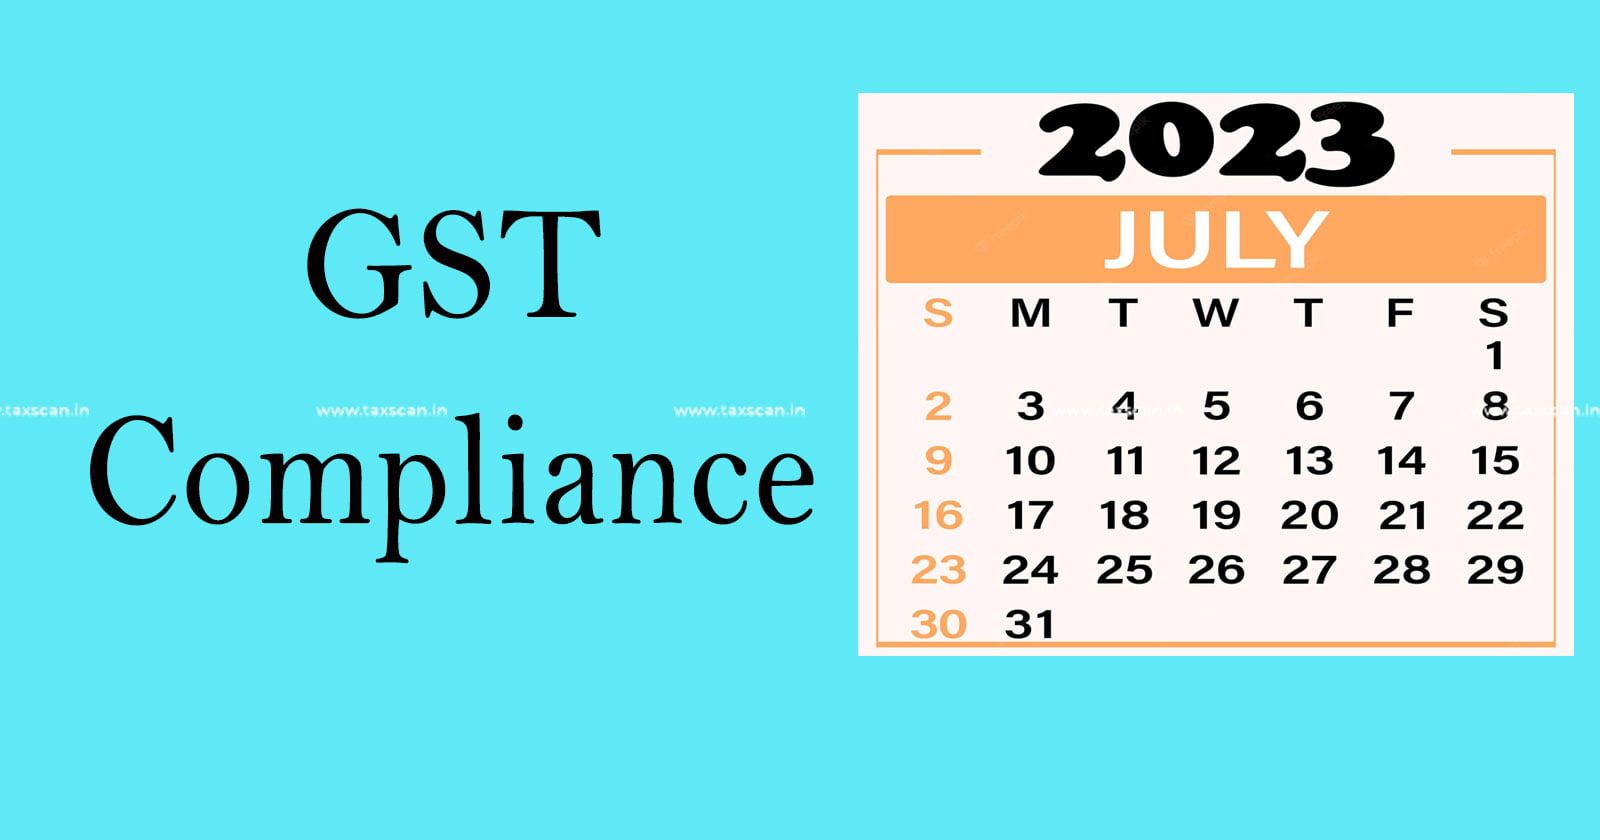 GST Compliance Calendar for July 2023